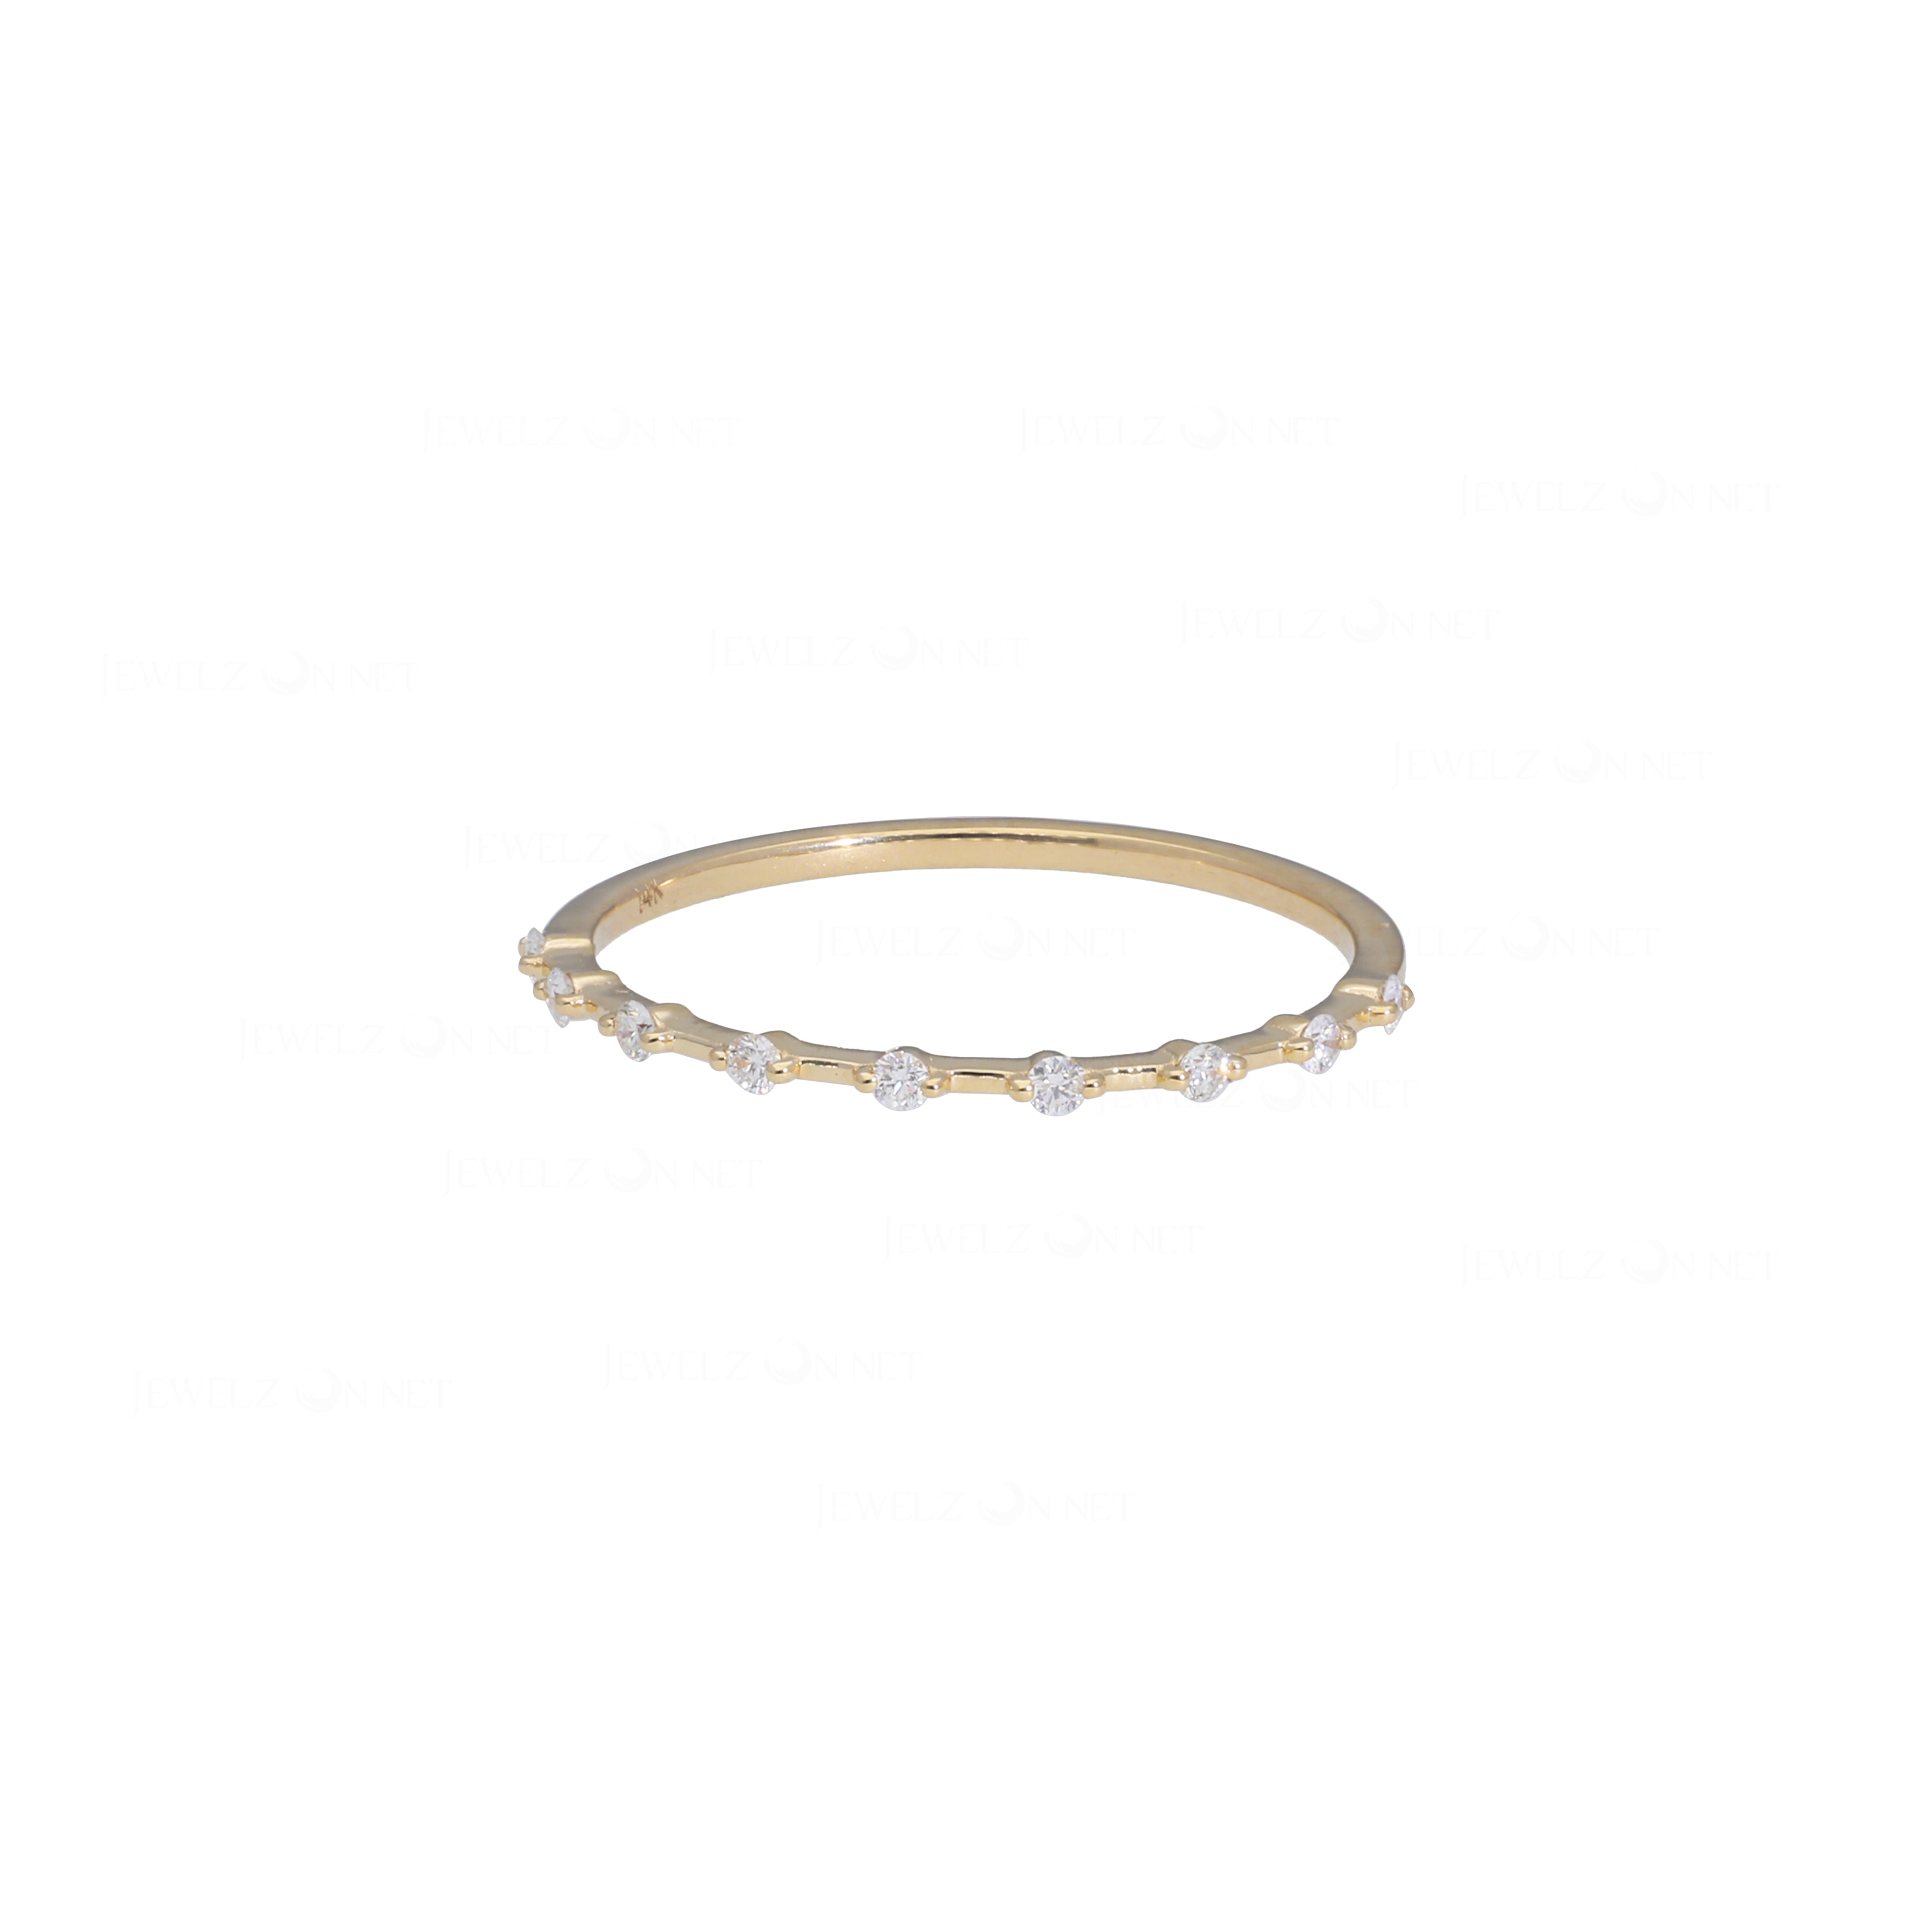 Solid 14k Yellow Gold Diamond Minimalist Thin Band Ring Fine Handmade Jewelry - The Jewelz 